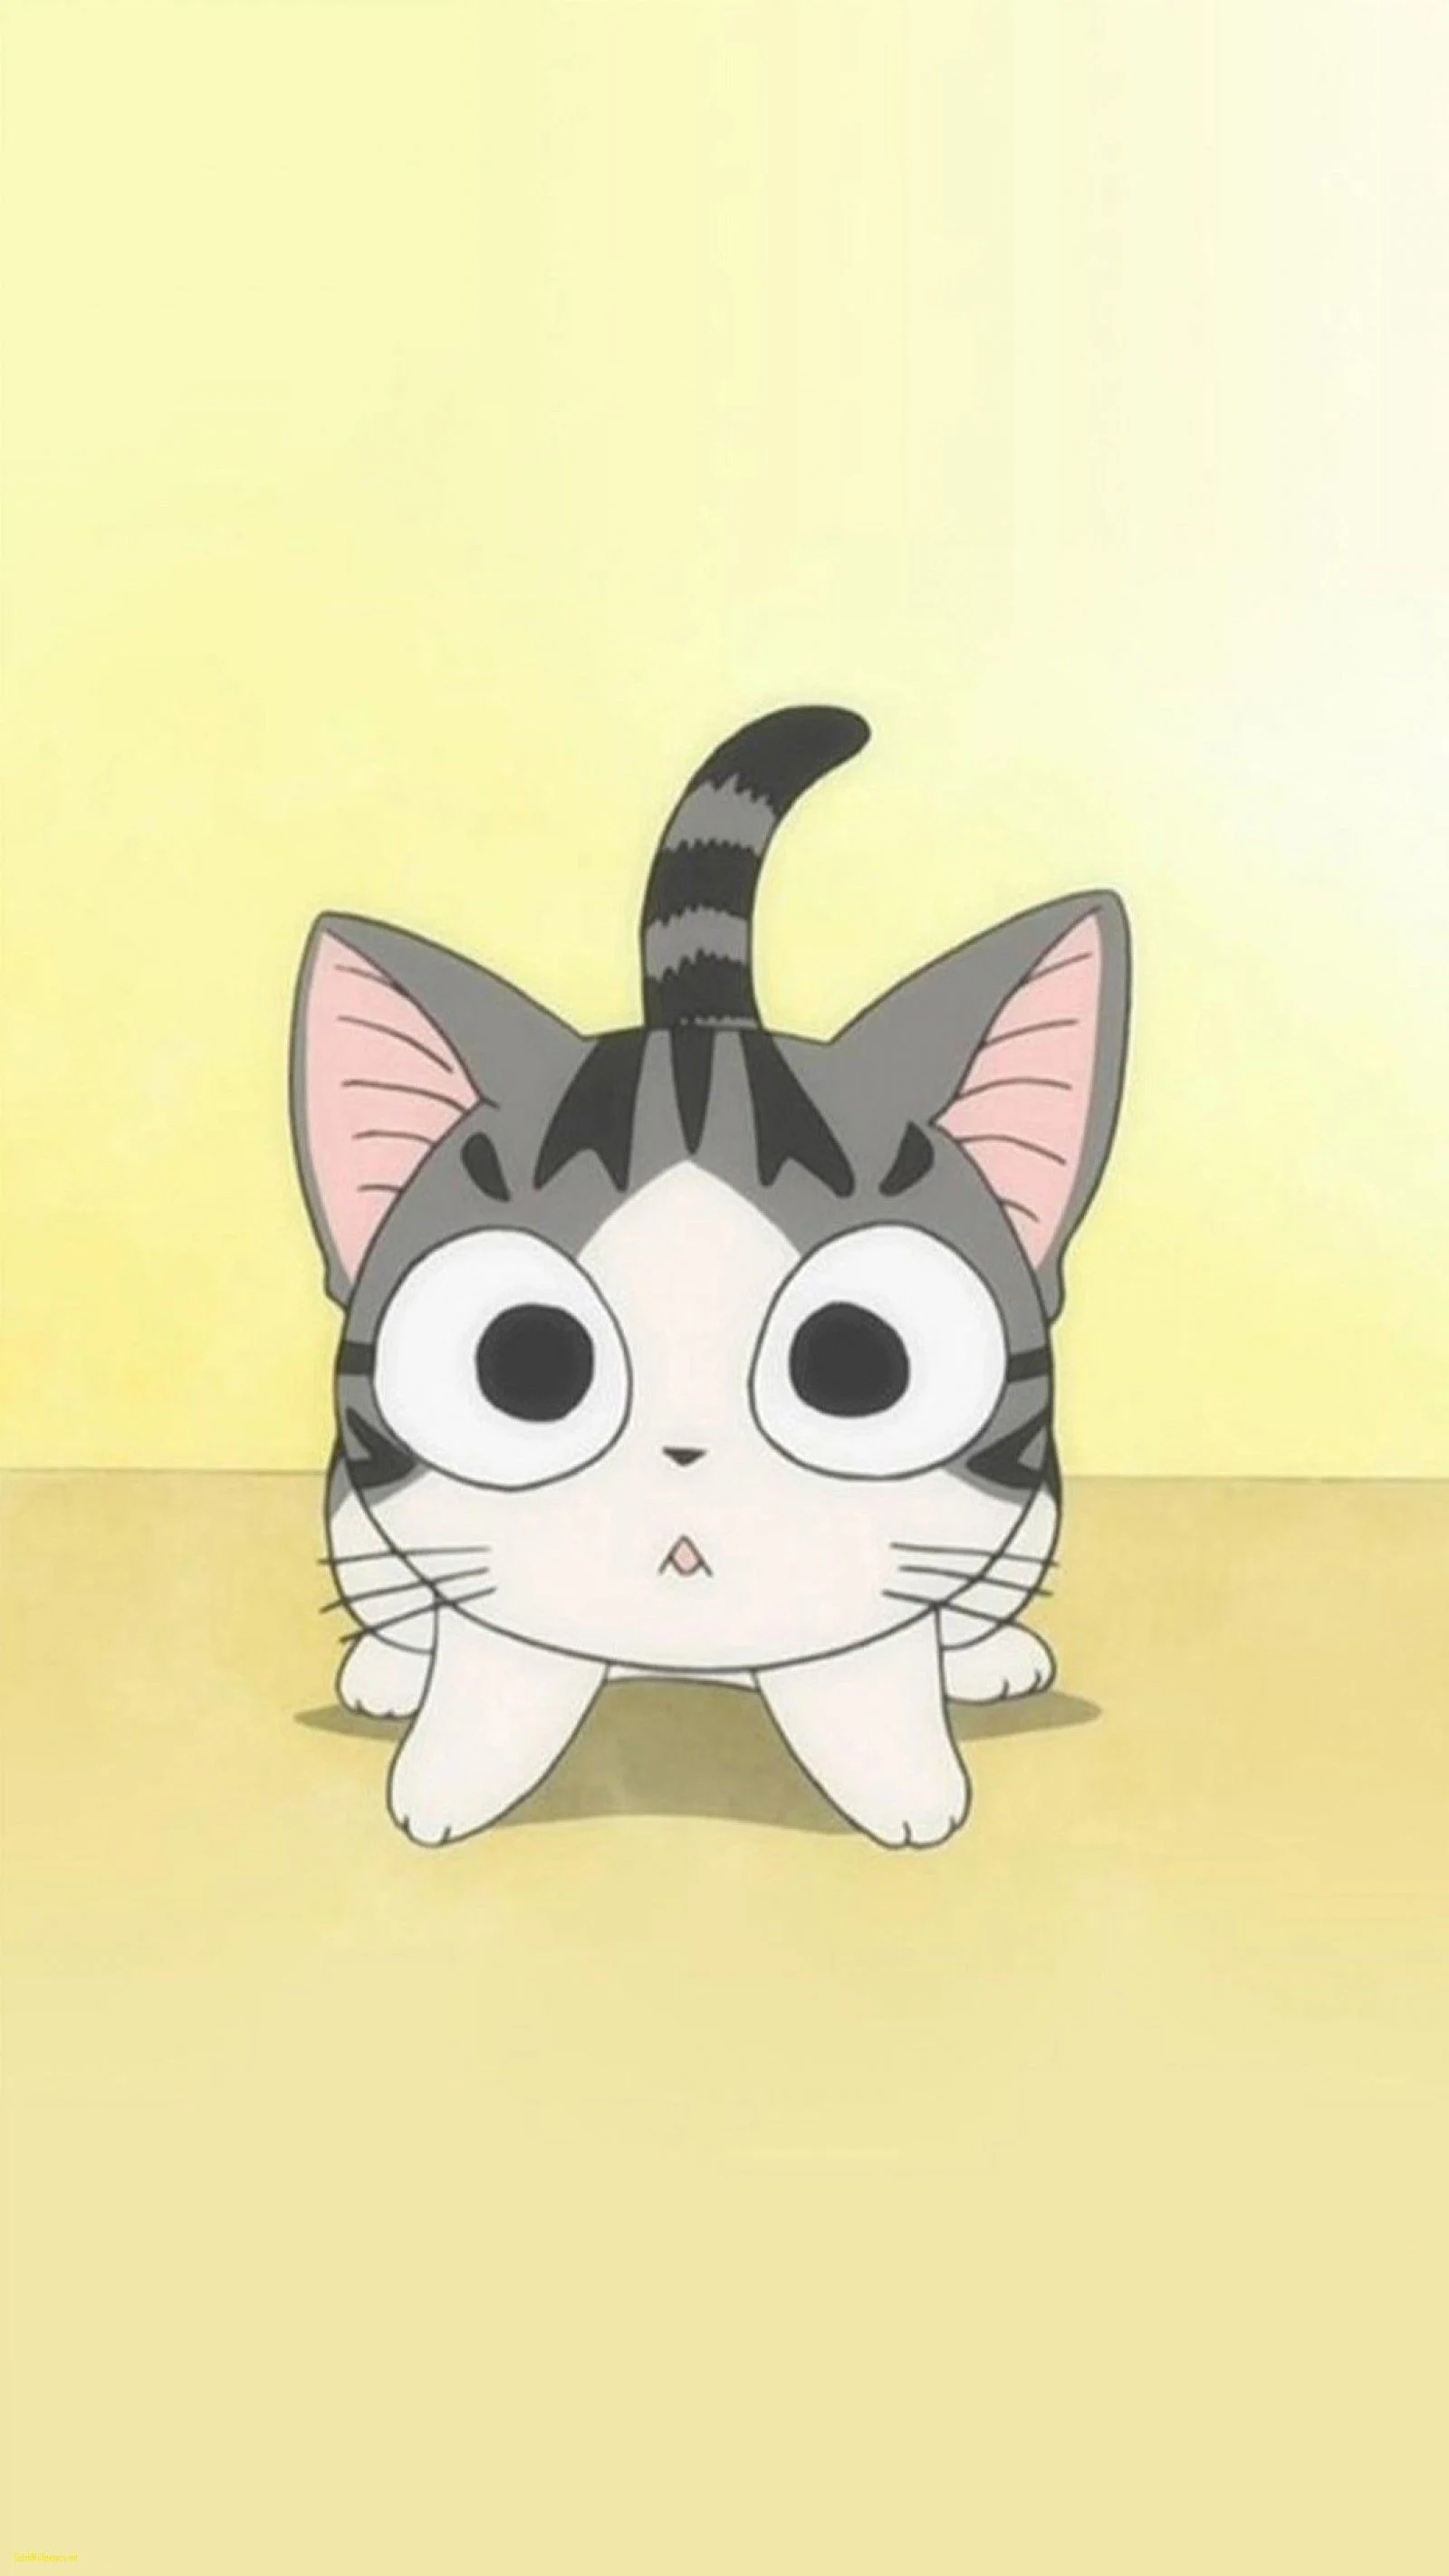 Cute cartoon cat wallpapers download